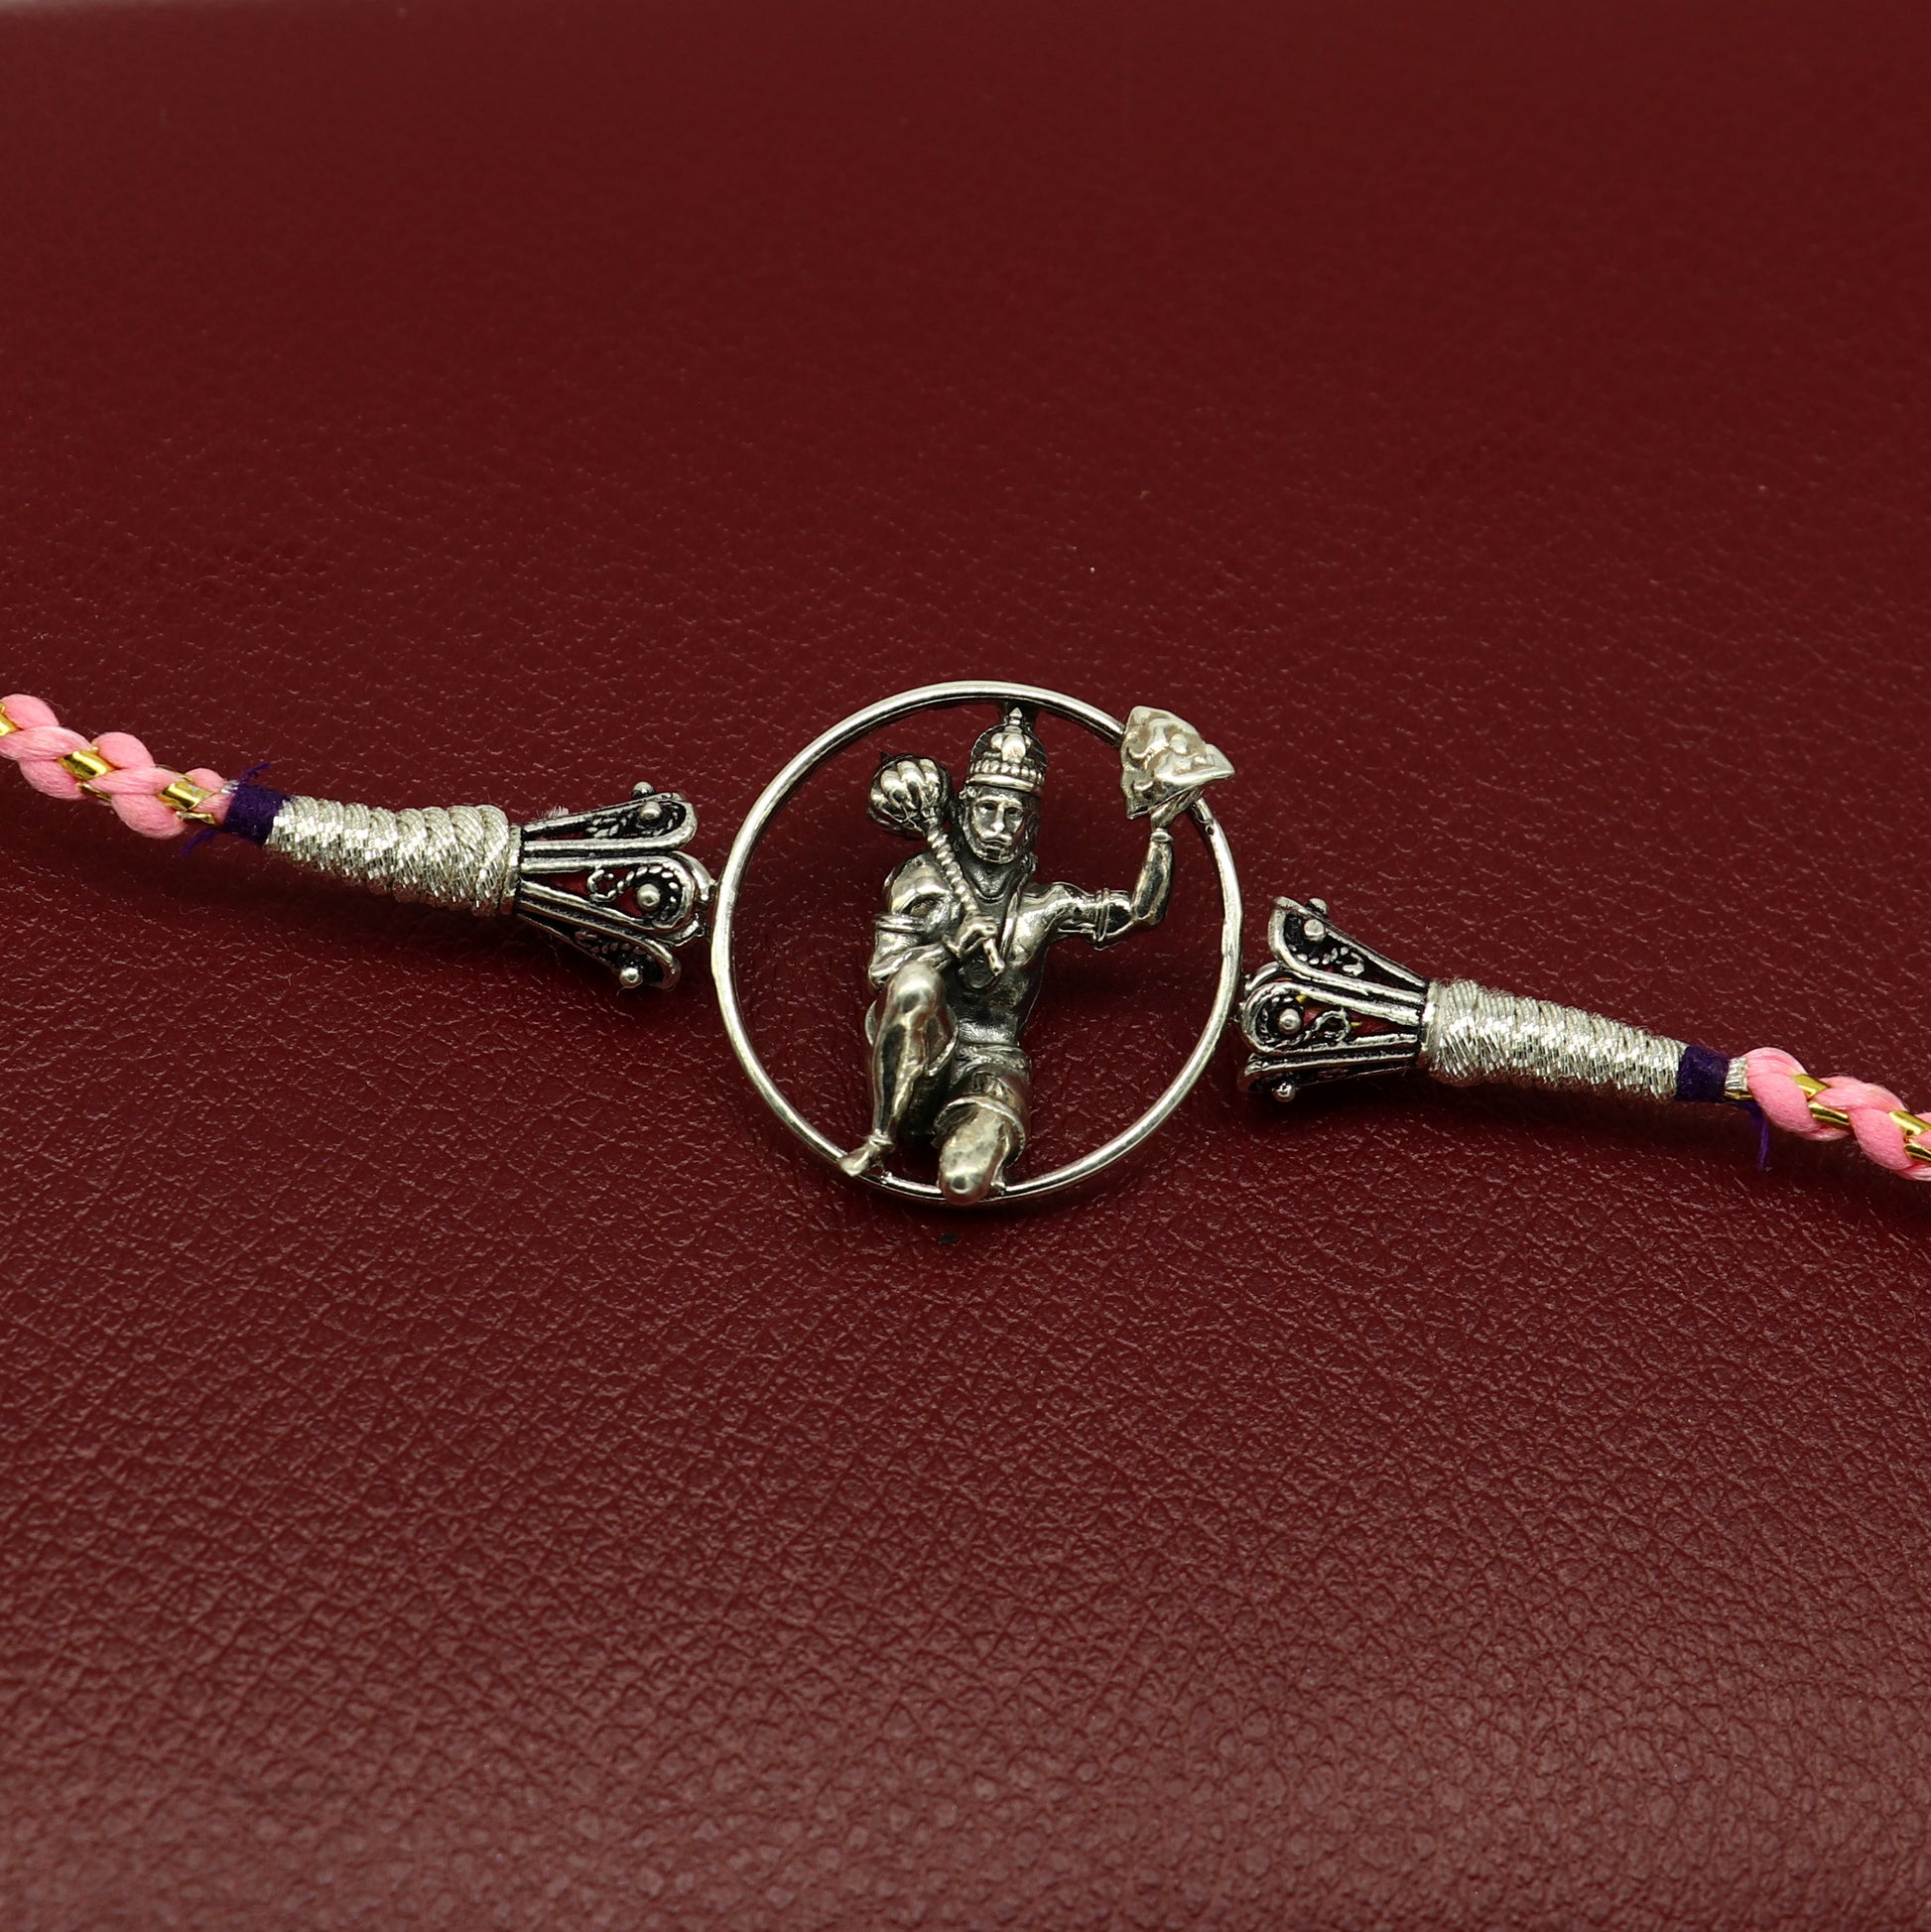 925 sterling silver handmade hanuman ji design Rakhi Bracelet, amazing stylish gift for Rakshabandhan rk31 - TRIBAL ORNAMENTS